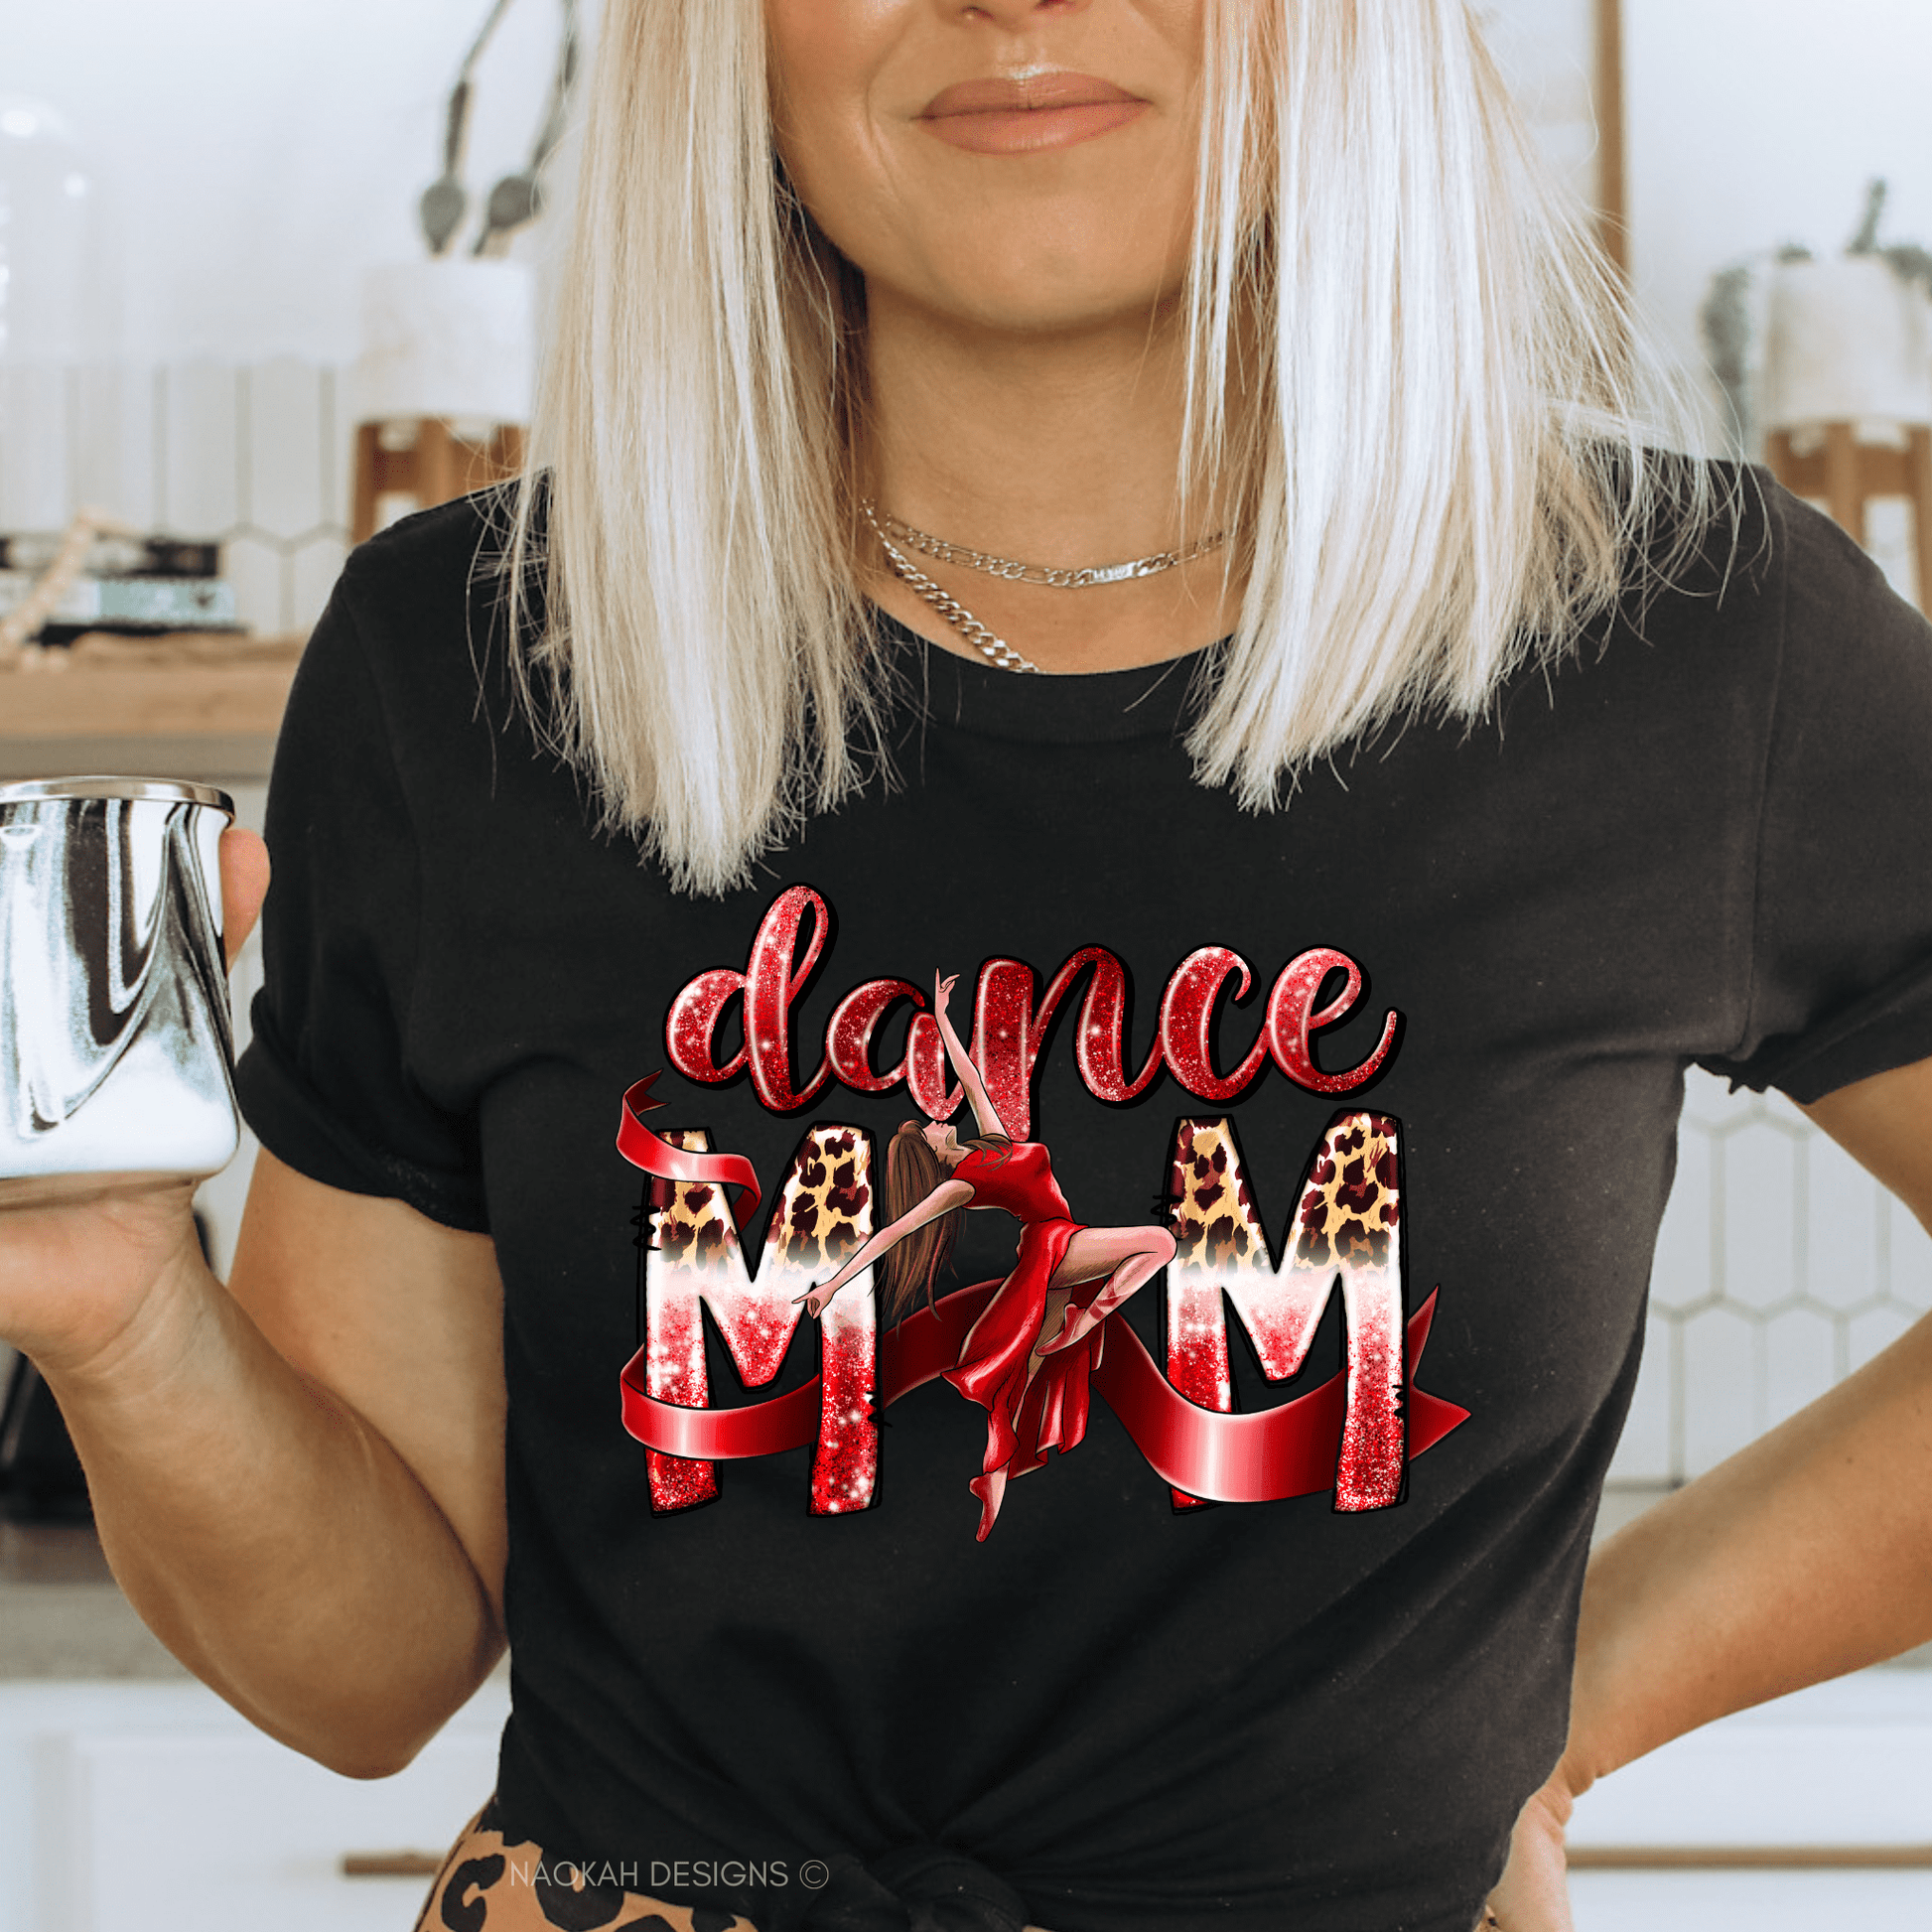 Dance Mom leopard print shirt, DANCE MOM Shirt, DANCE Mom Gift, Dance Mama Shirt, Dance Team, Dance Competition Shirt, Dance Recital Shirt, Dancer Shirt, Dance Gift